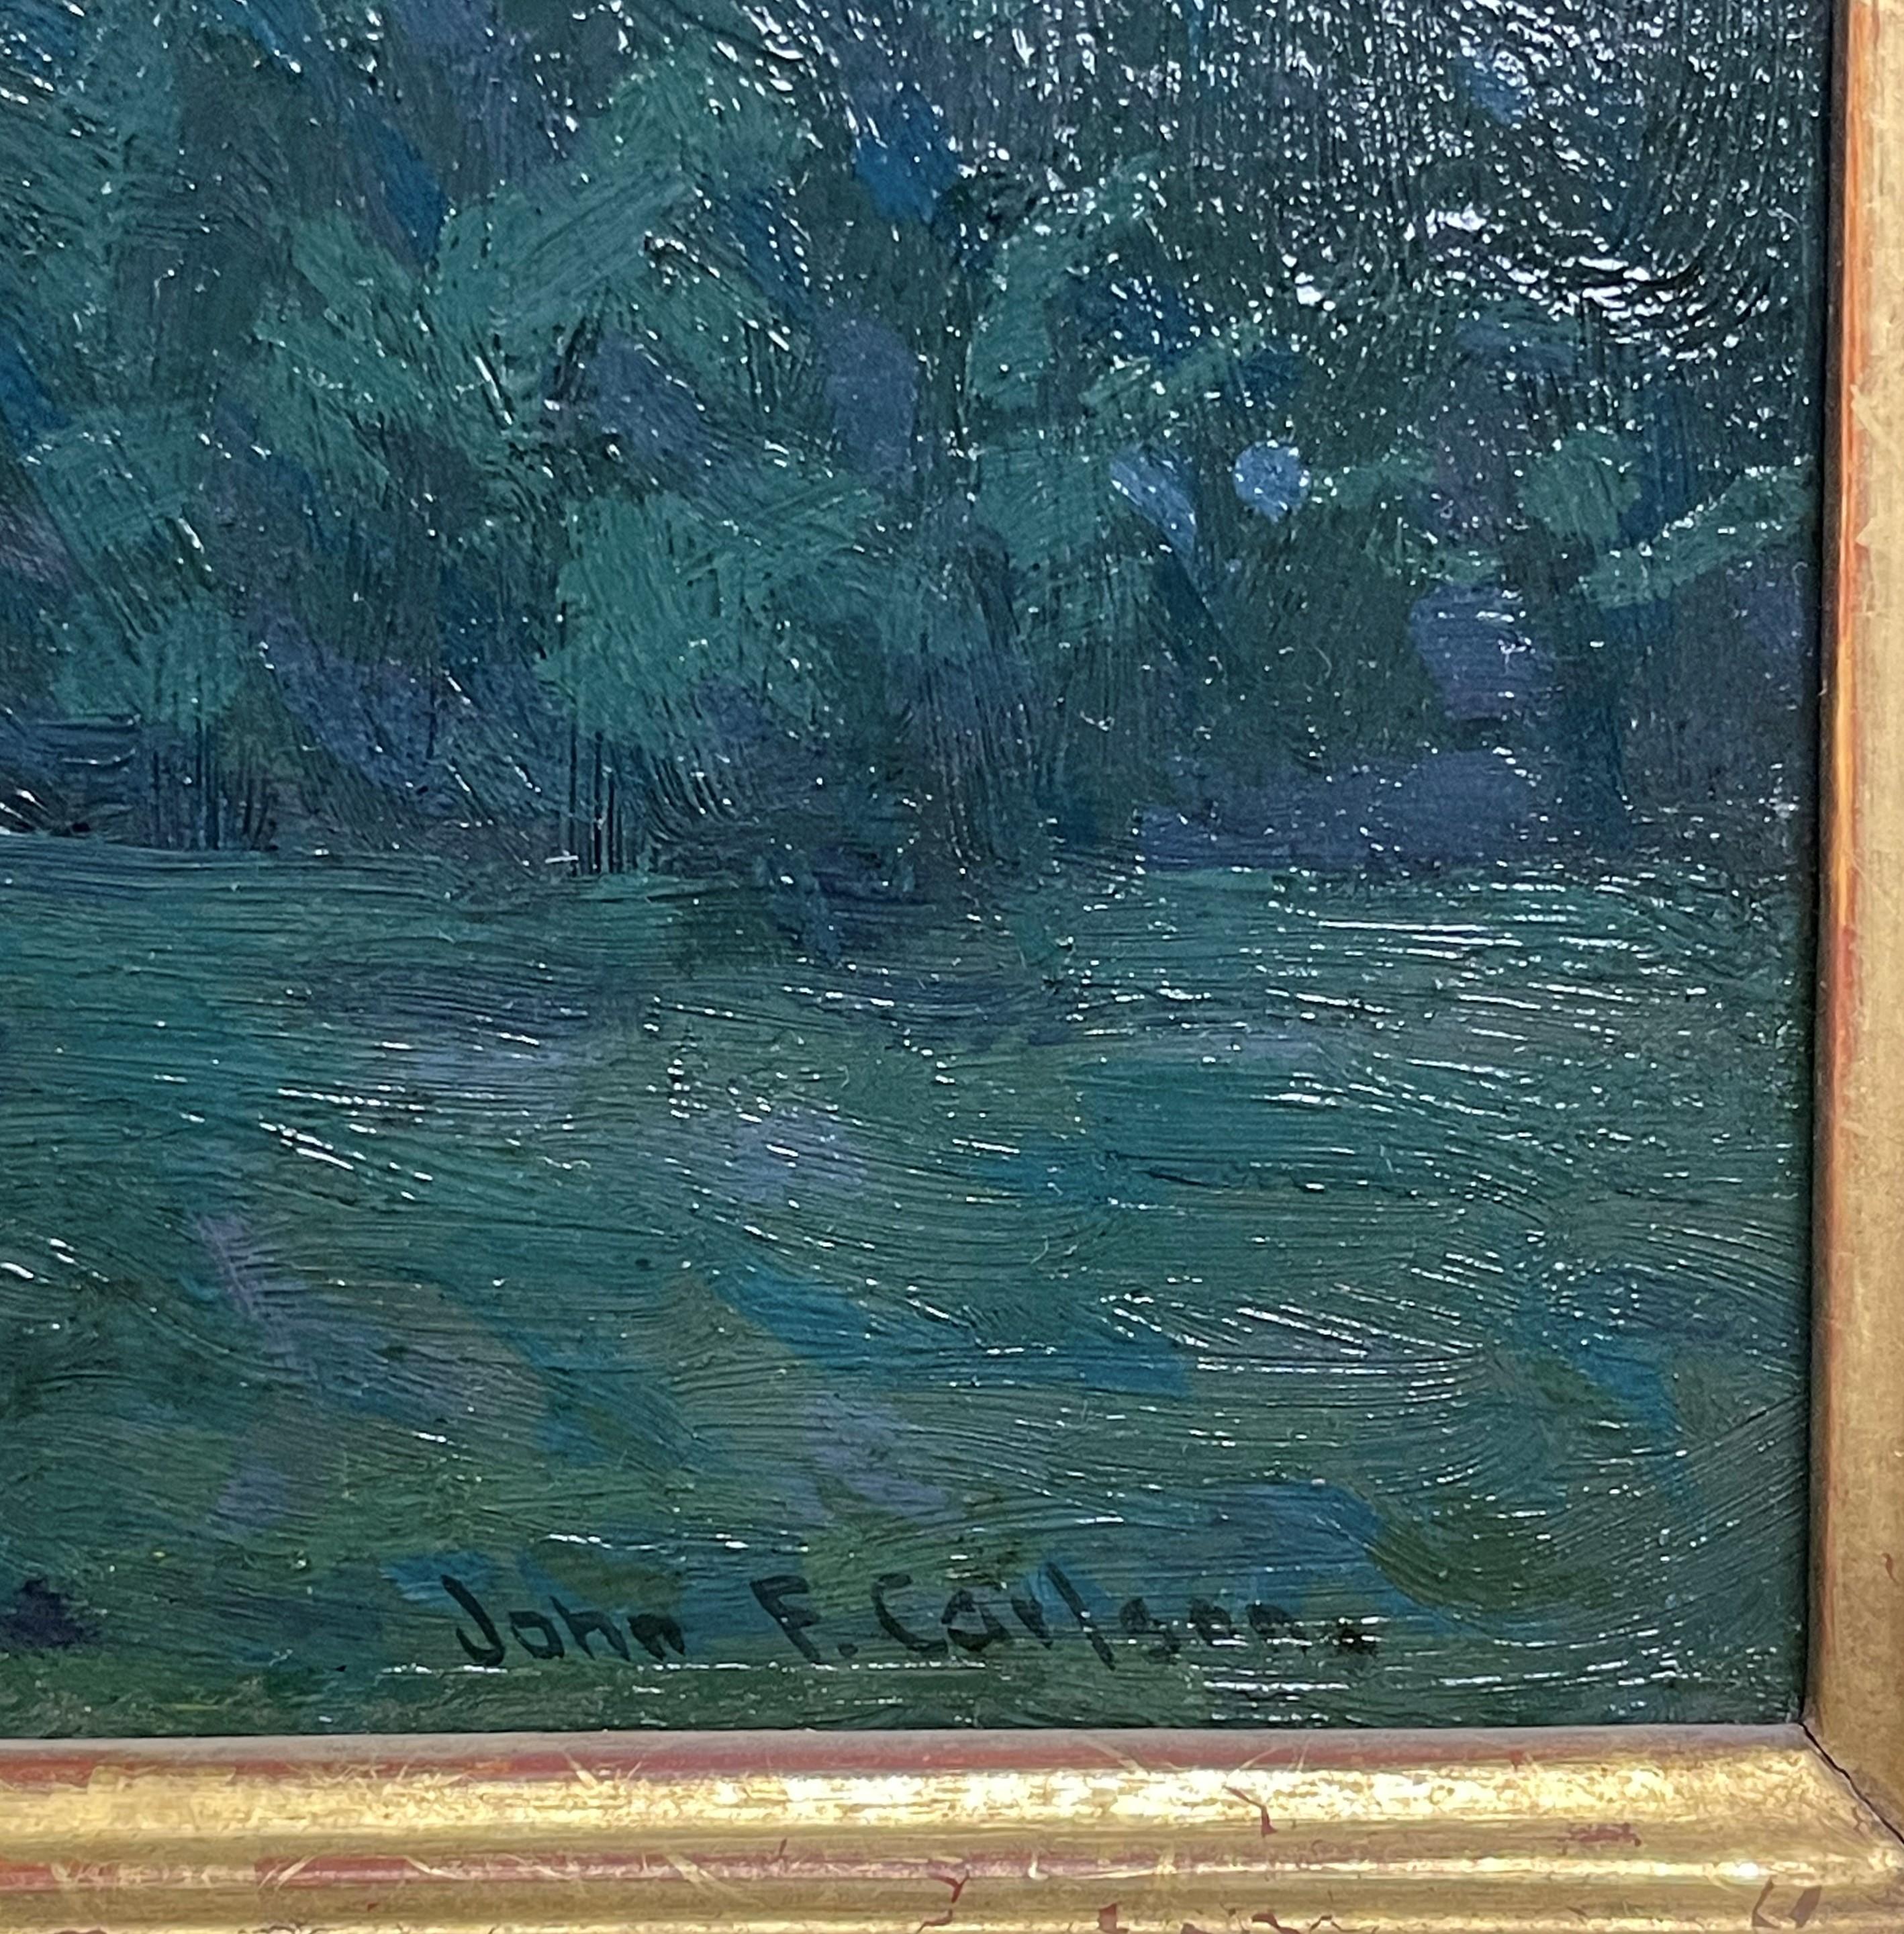  American Impressionist Woodstock Artist John F Carlson Oil Painting Night Fall For Sale 3